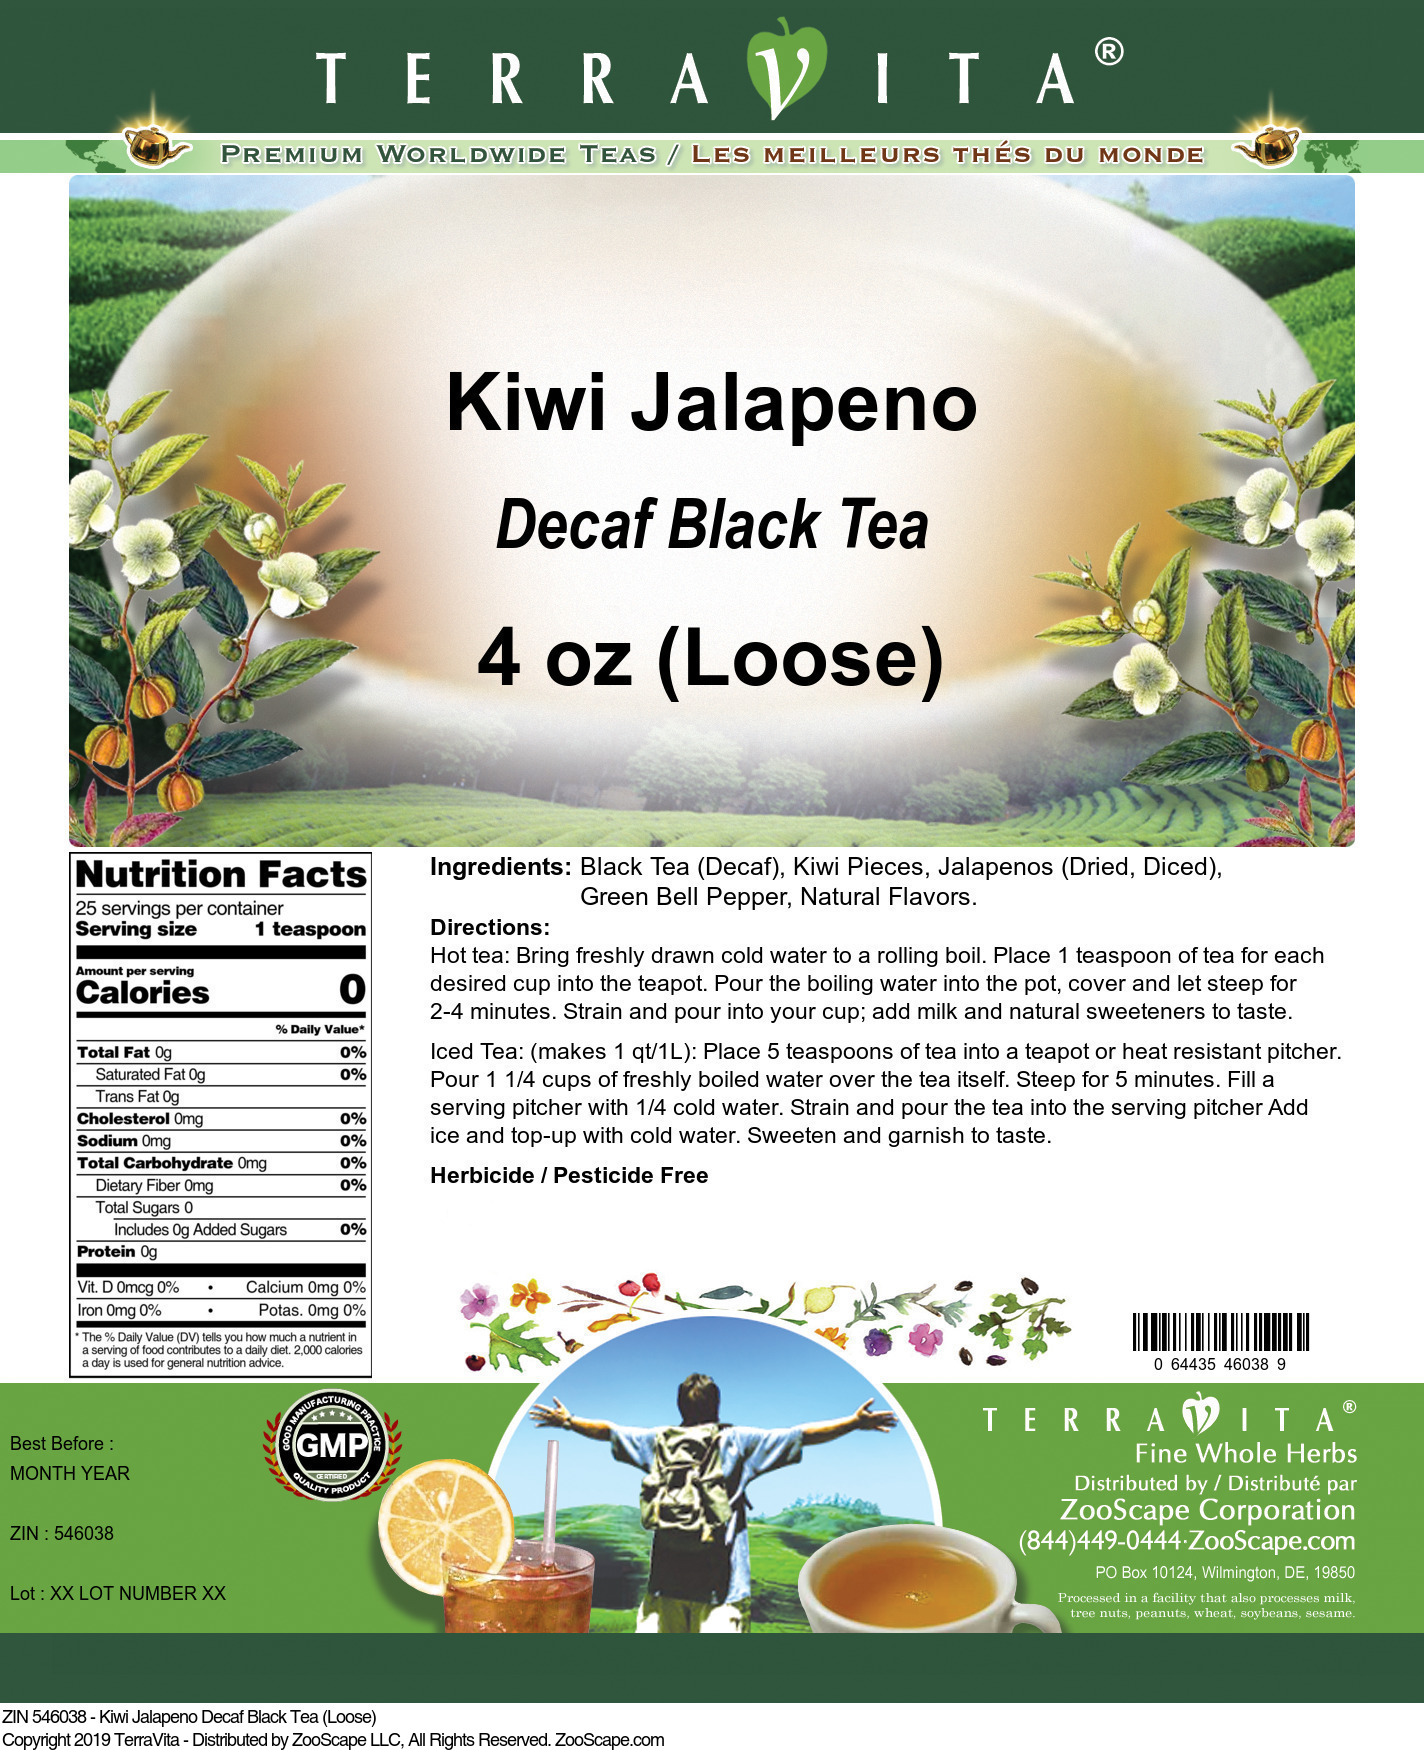 Kiwi Jalapeno Decaf Black Tea (Loose) - Label